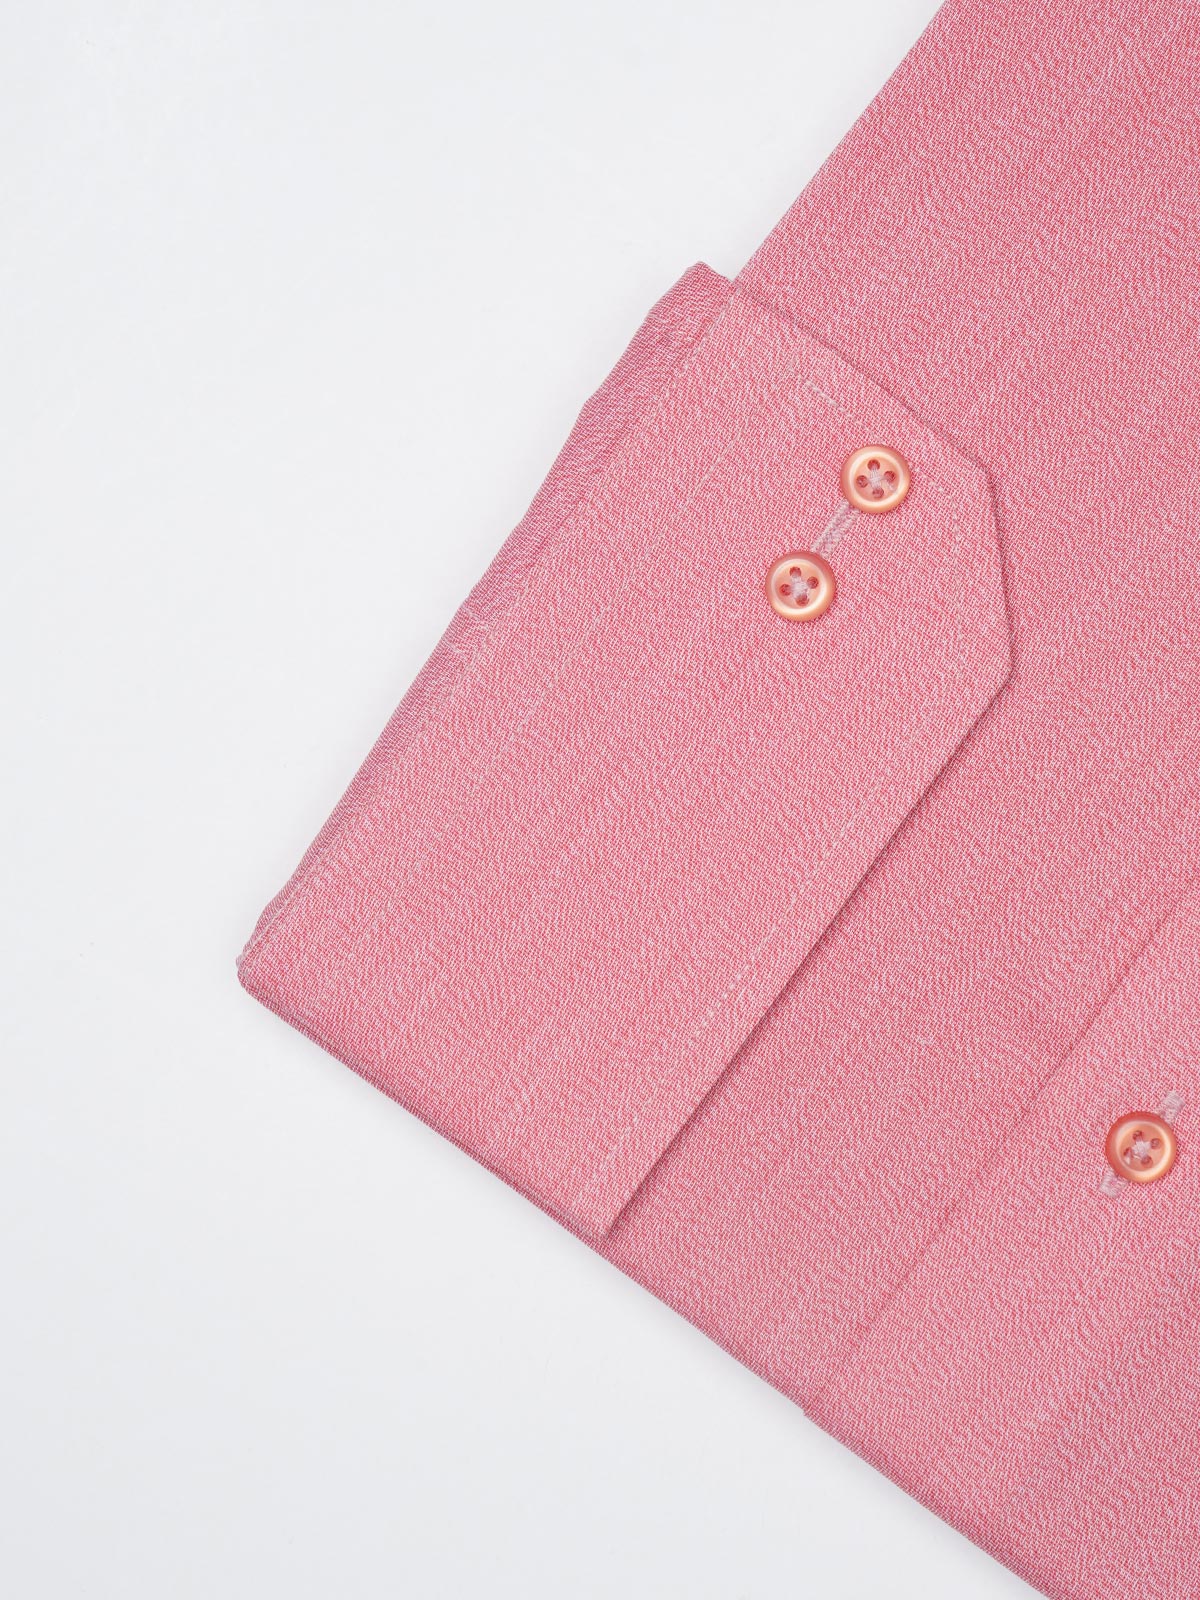 Dark Pink Self Elite Edition, French Collar Men’s Formal Shirt (FS-1131)